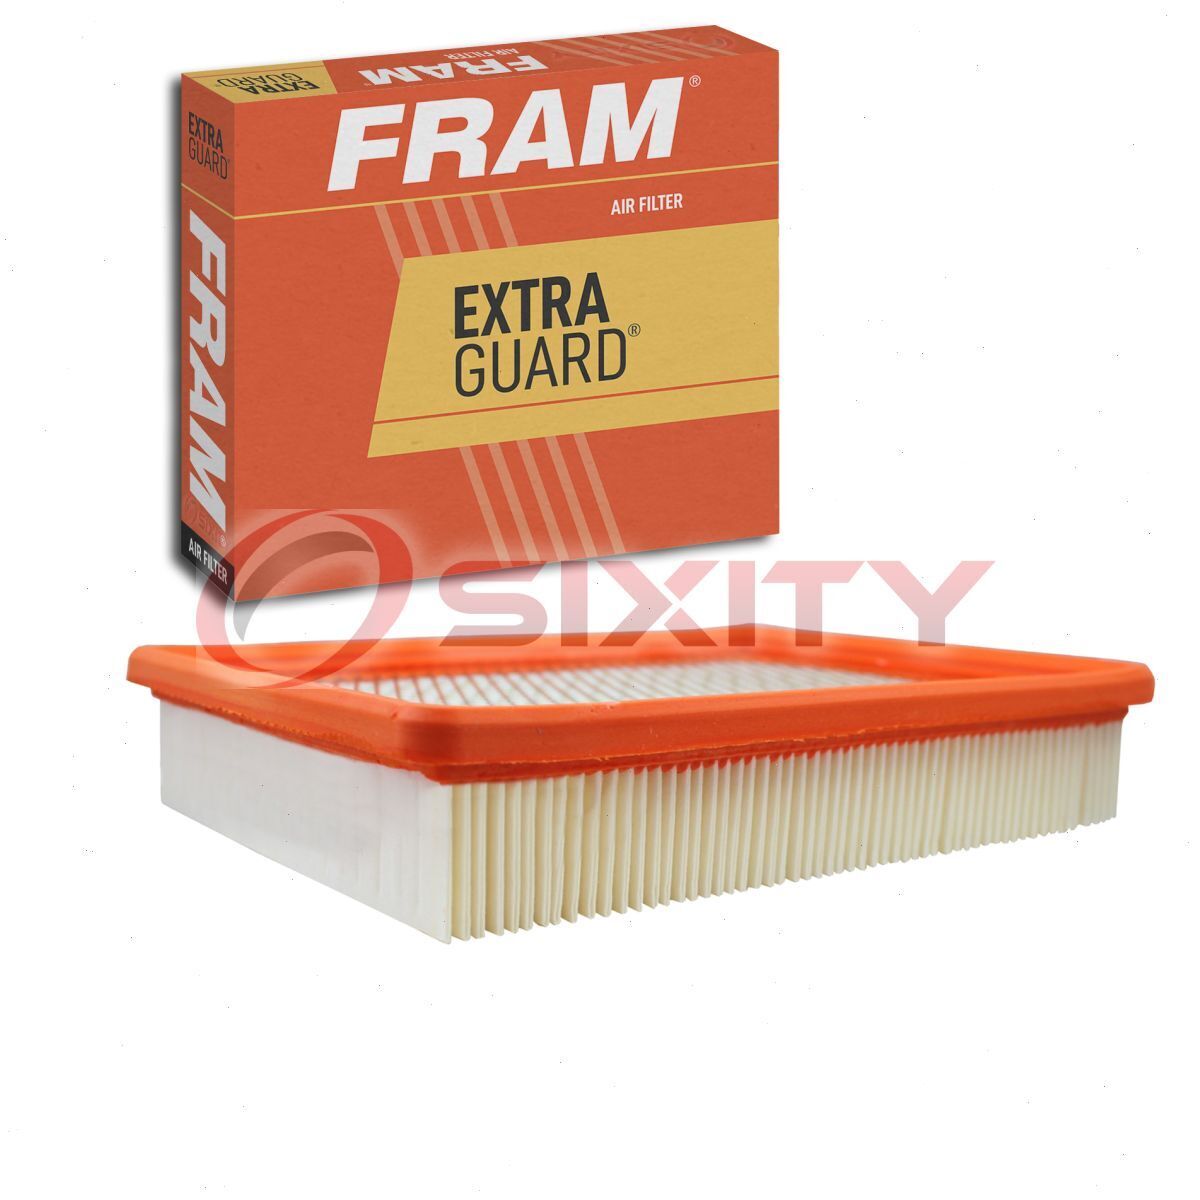 FRAM Extra Guard Air Filter for 1997-2005 Chevrolet Venture Intake Inlet wv